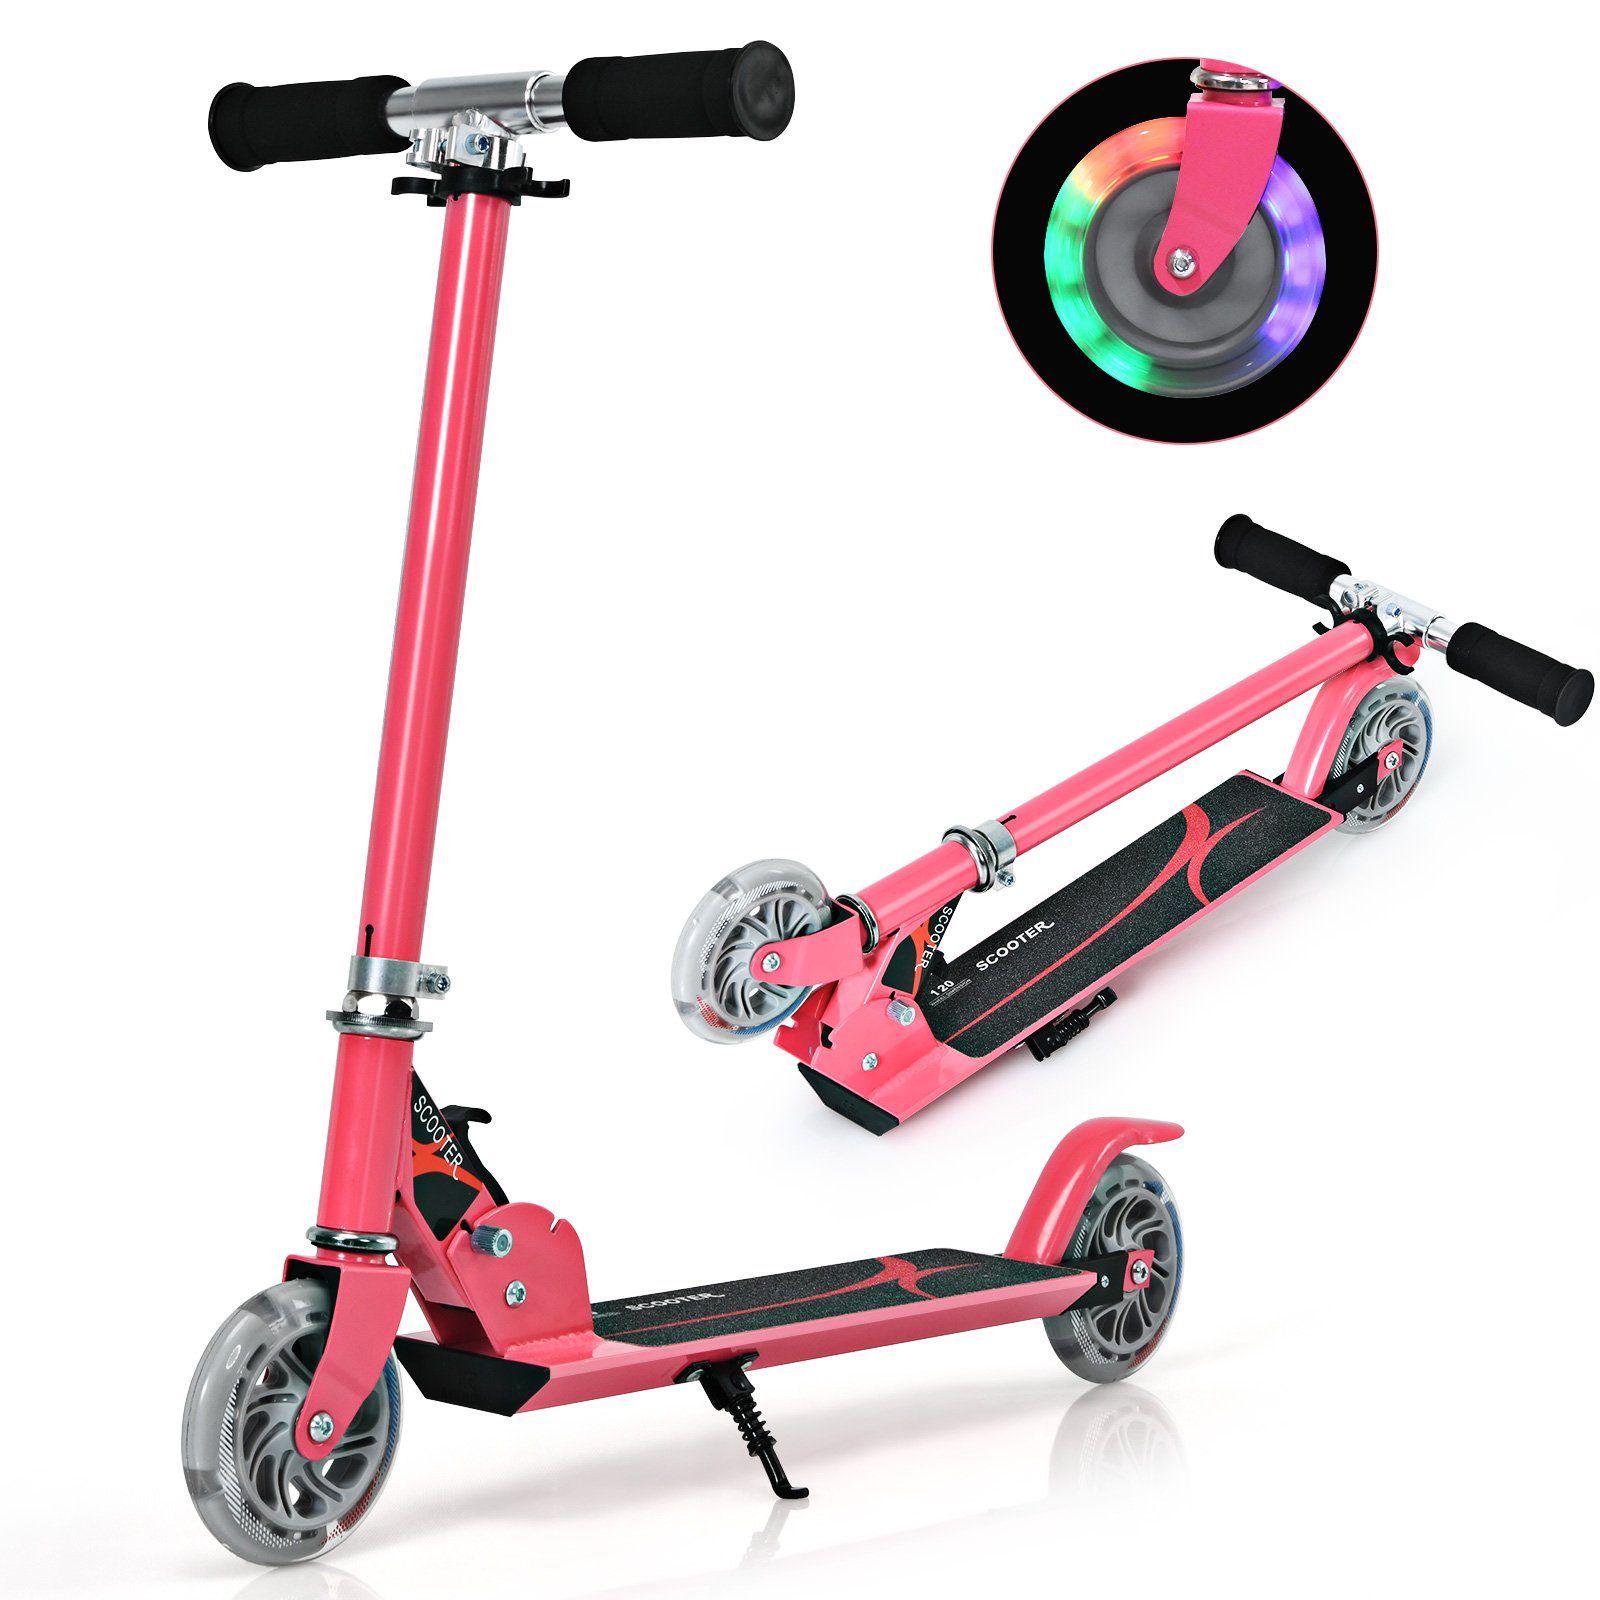 COSTWAY Cityroller, mit höhenverstellbar, LED Scooter Räder 2 rosa klappbar,